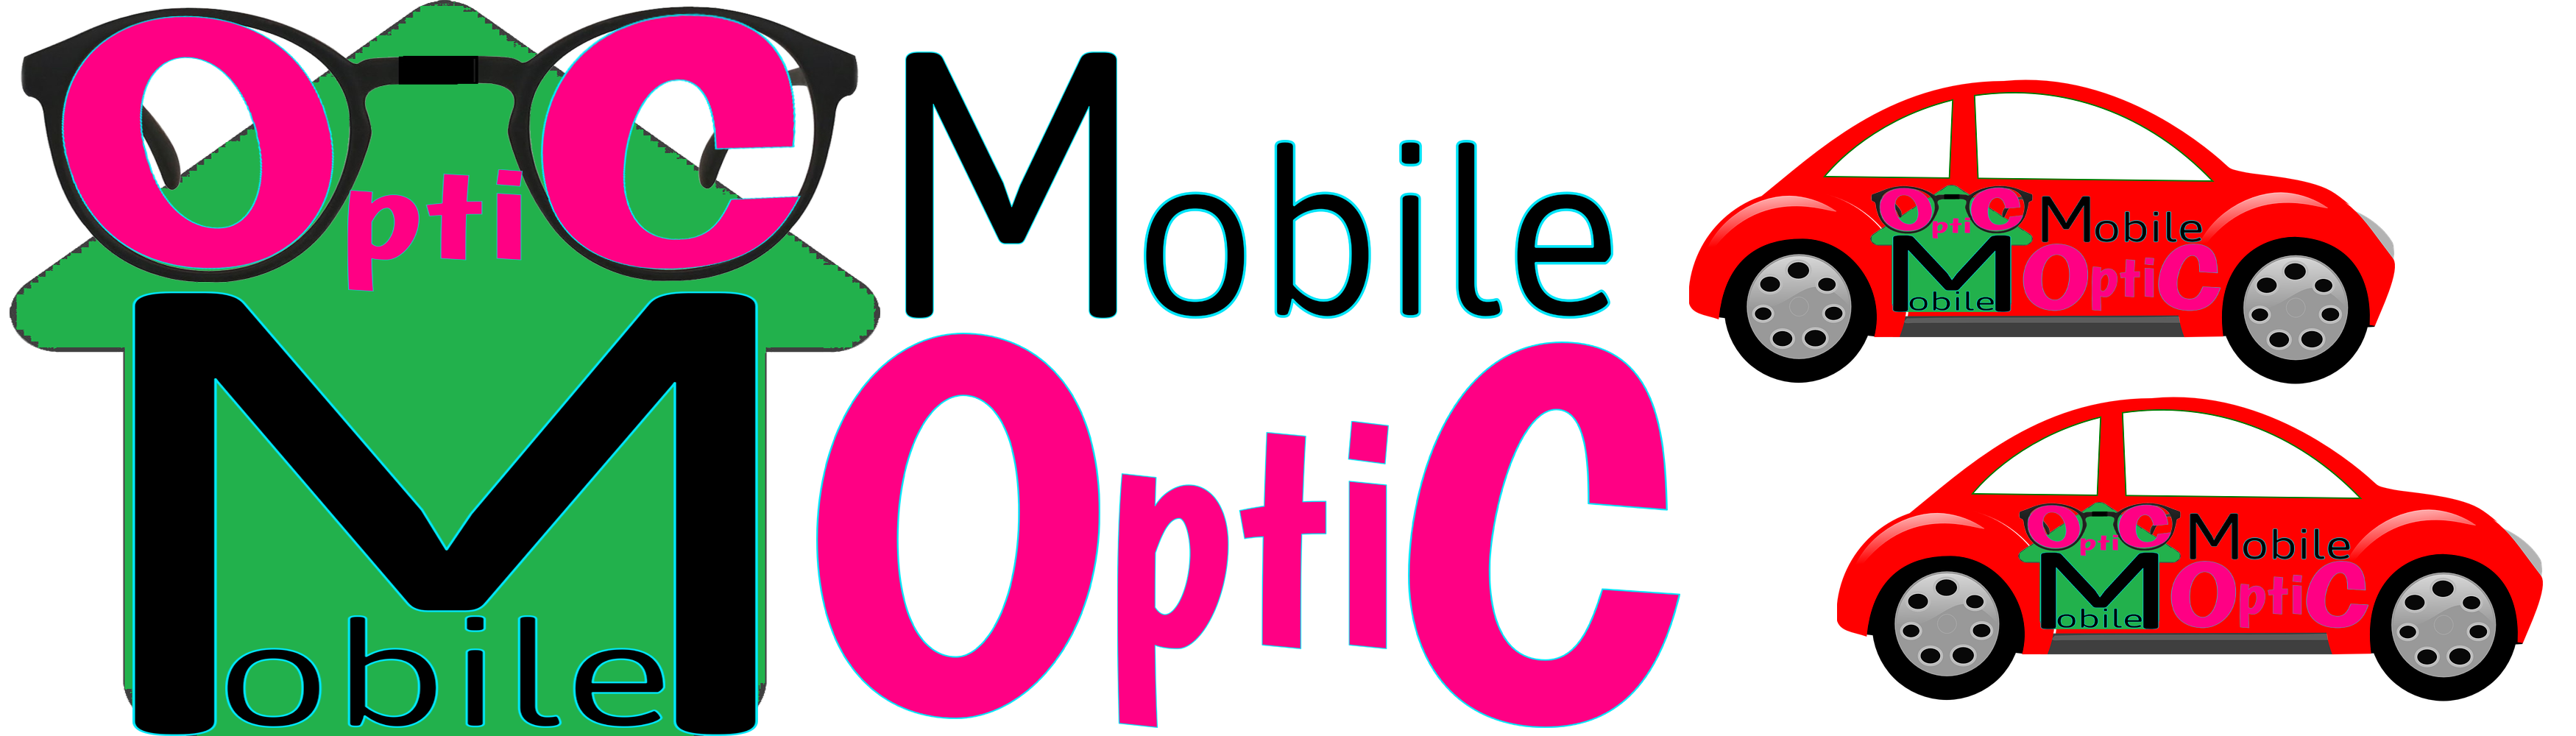 Mobile Optic